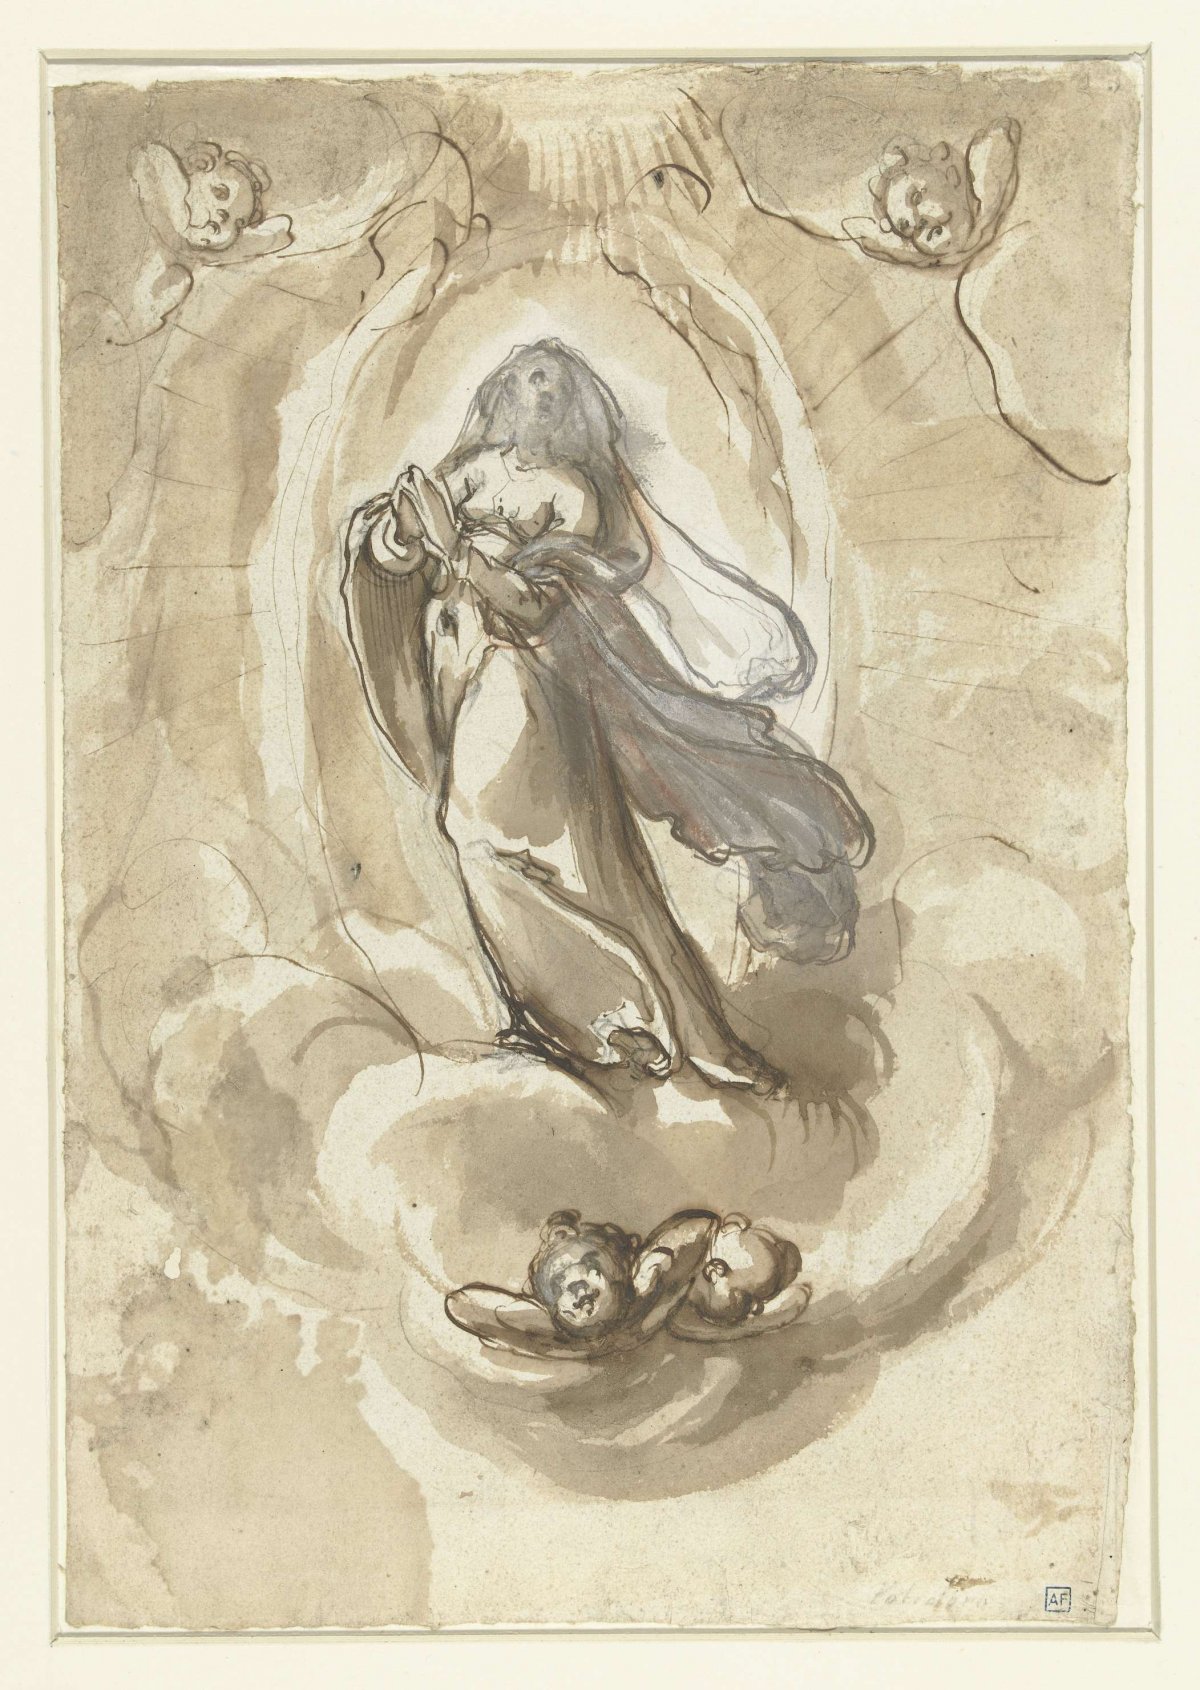 Allegory of the Immaculate Conception, Jacopo da Empoli, 1564 - 1612